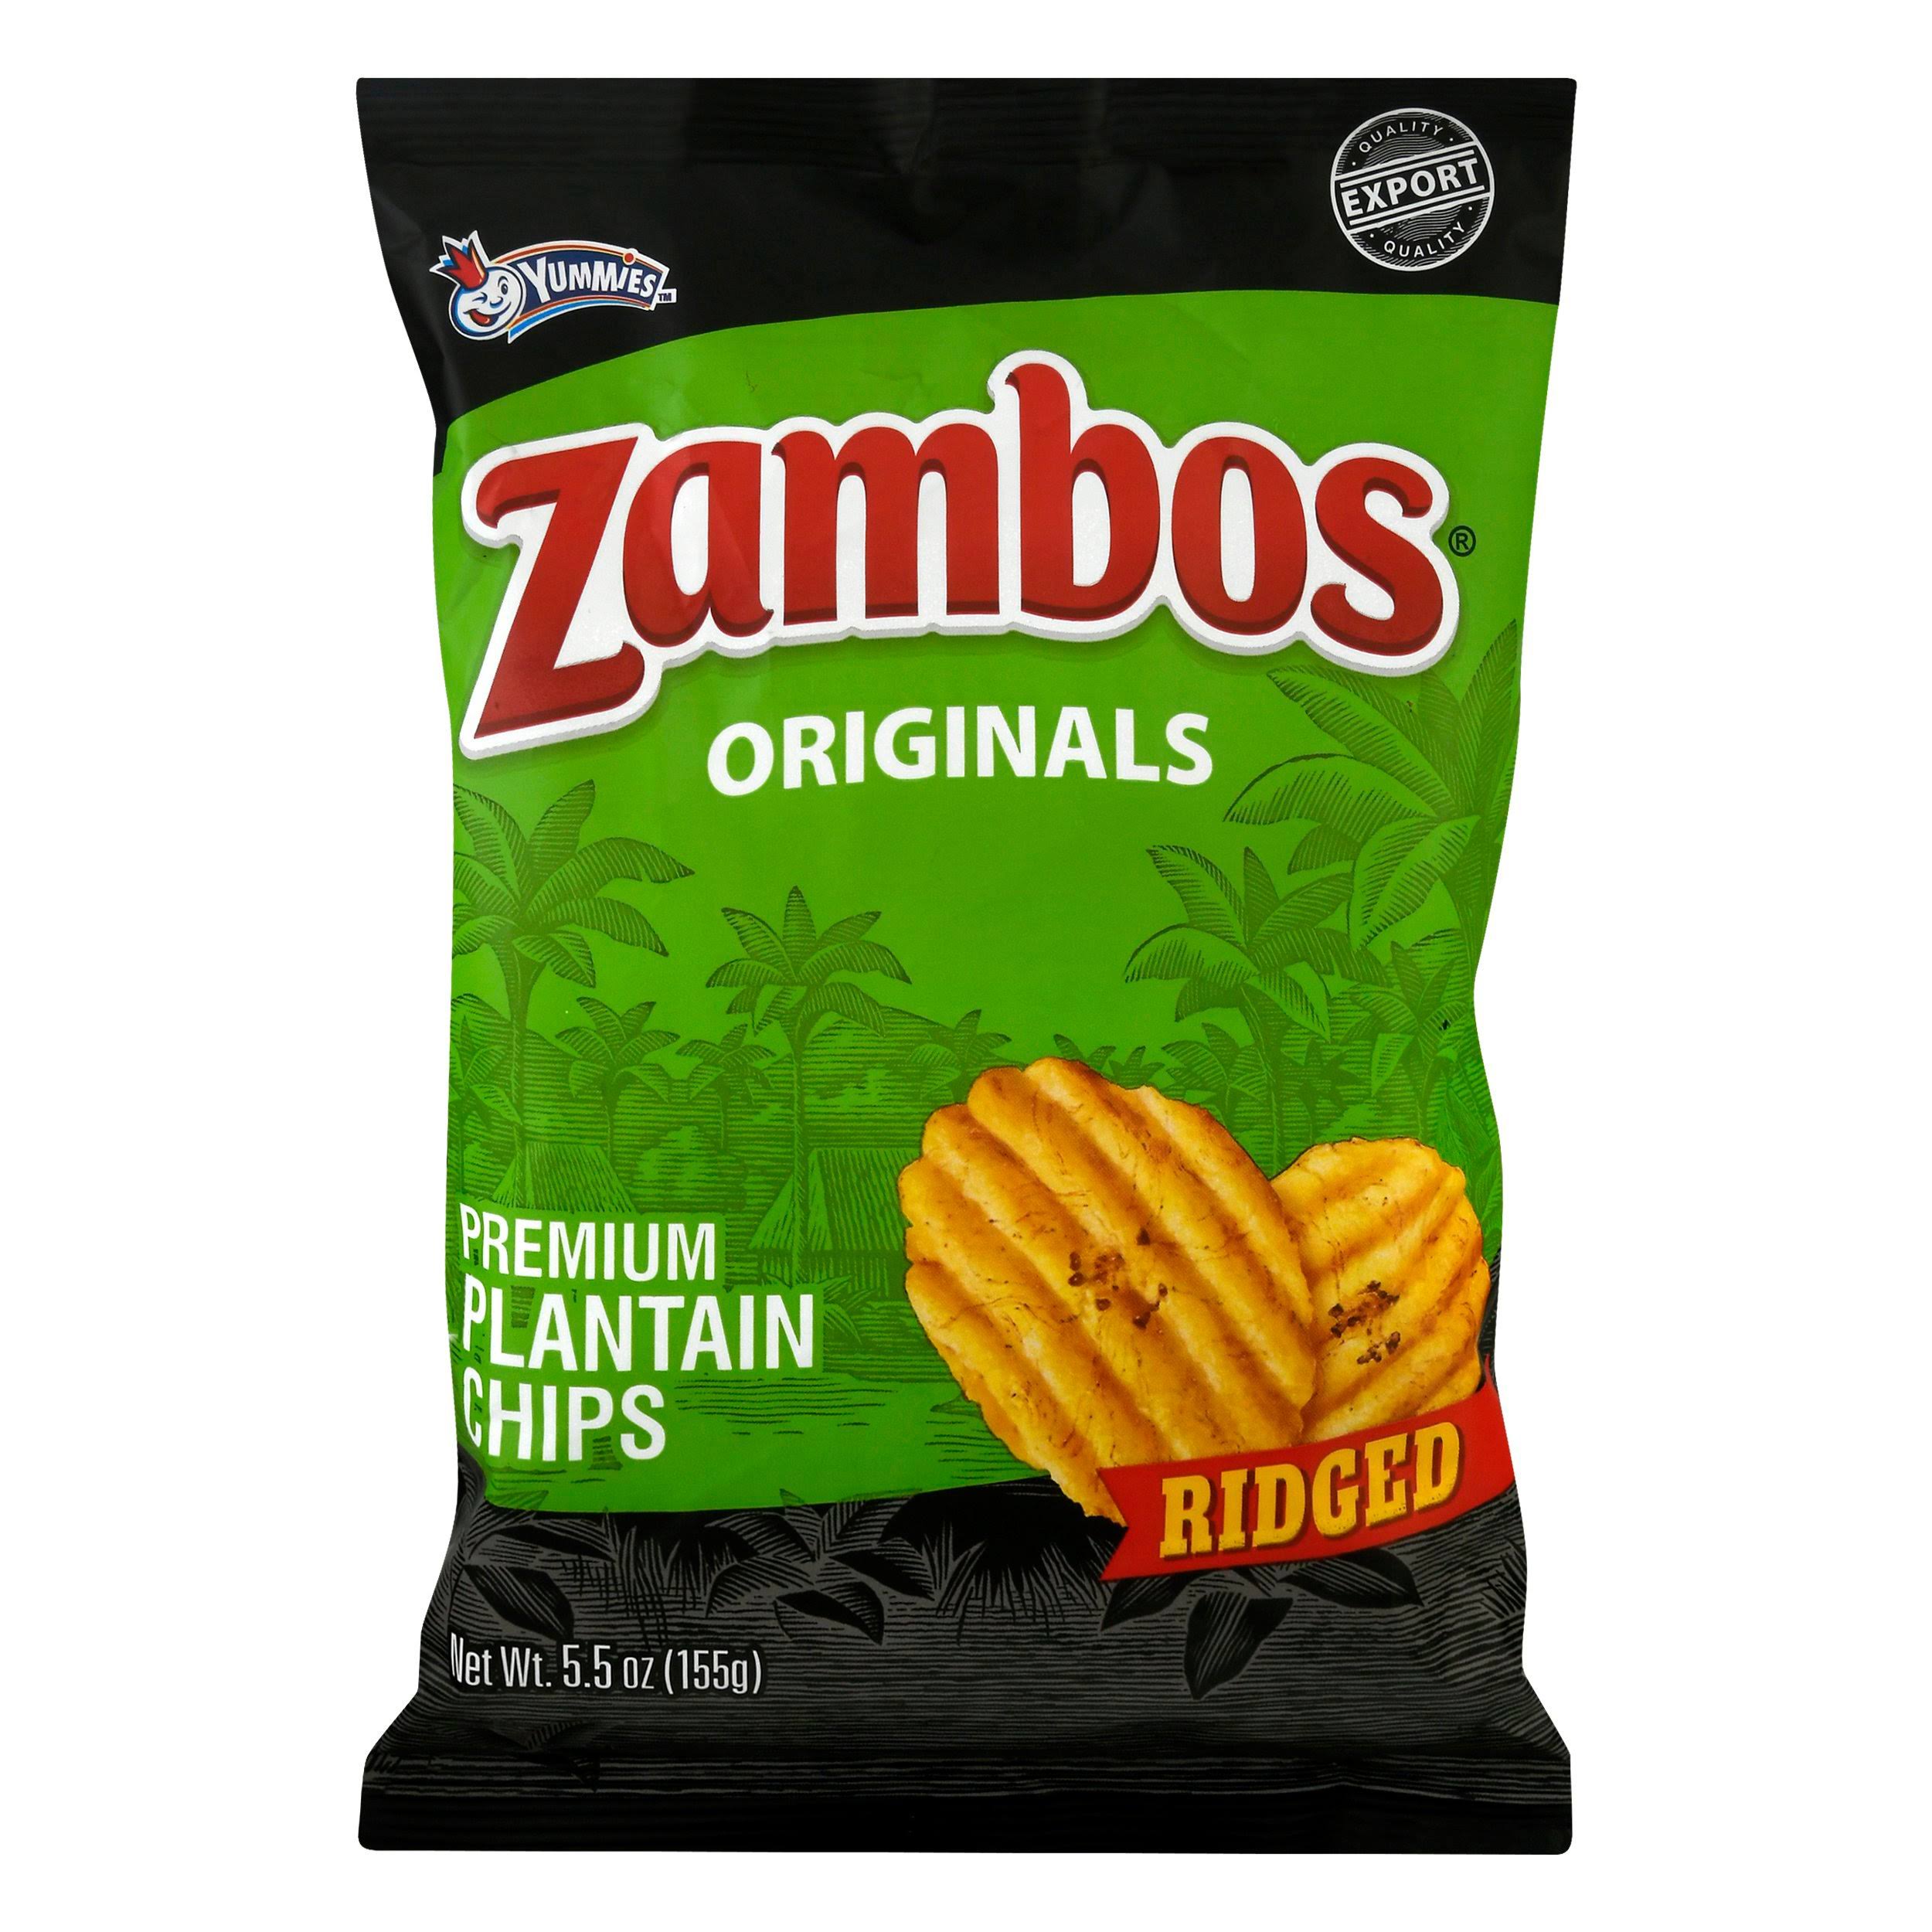 Zambos Plantain Chips, Originals, Ridged - 5.5 oz